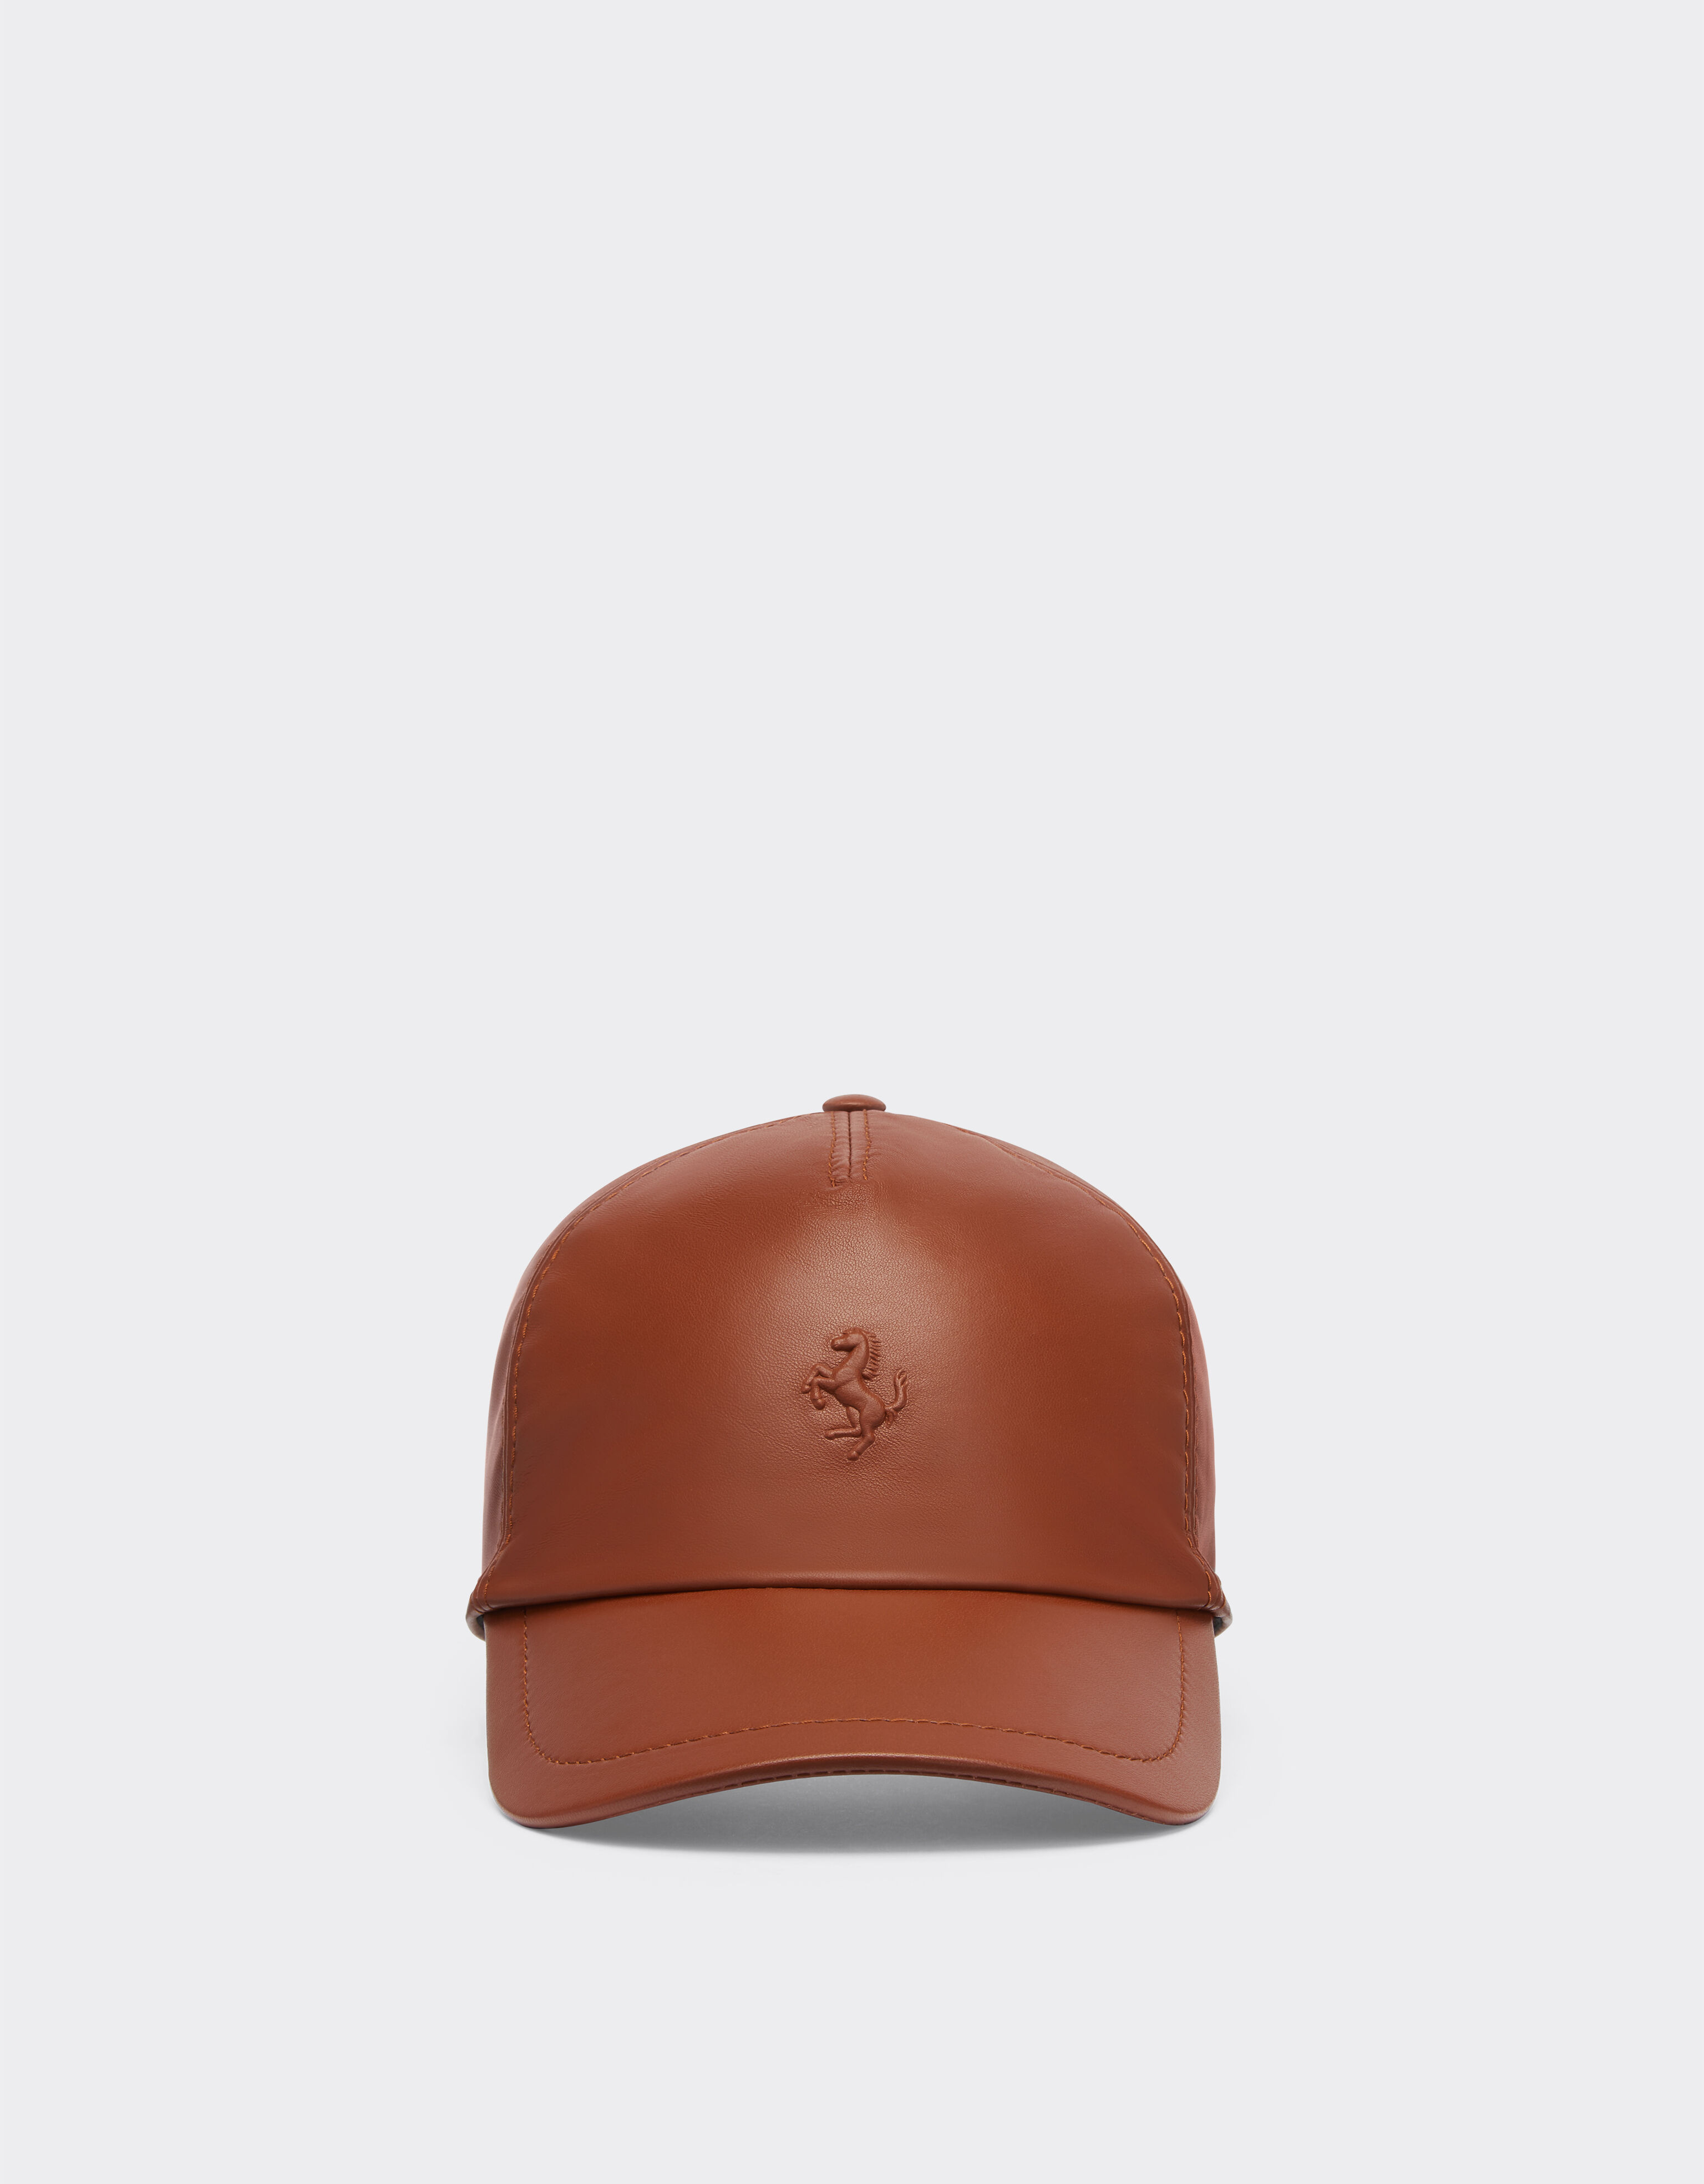 Ferrari Baseball cap with Prancing Horse logo Navy 20815f